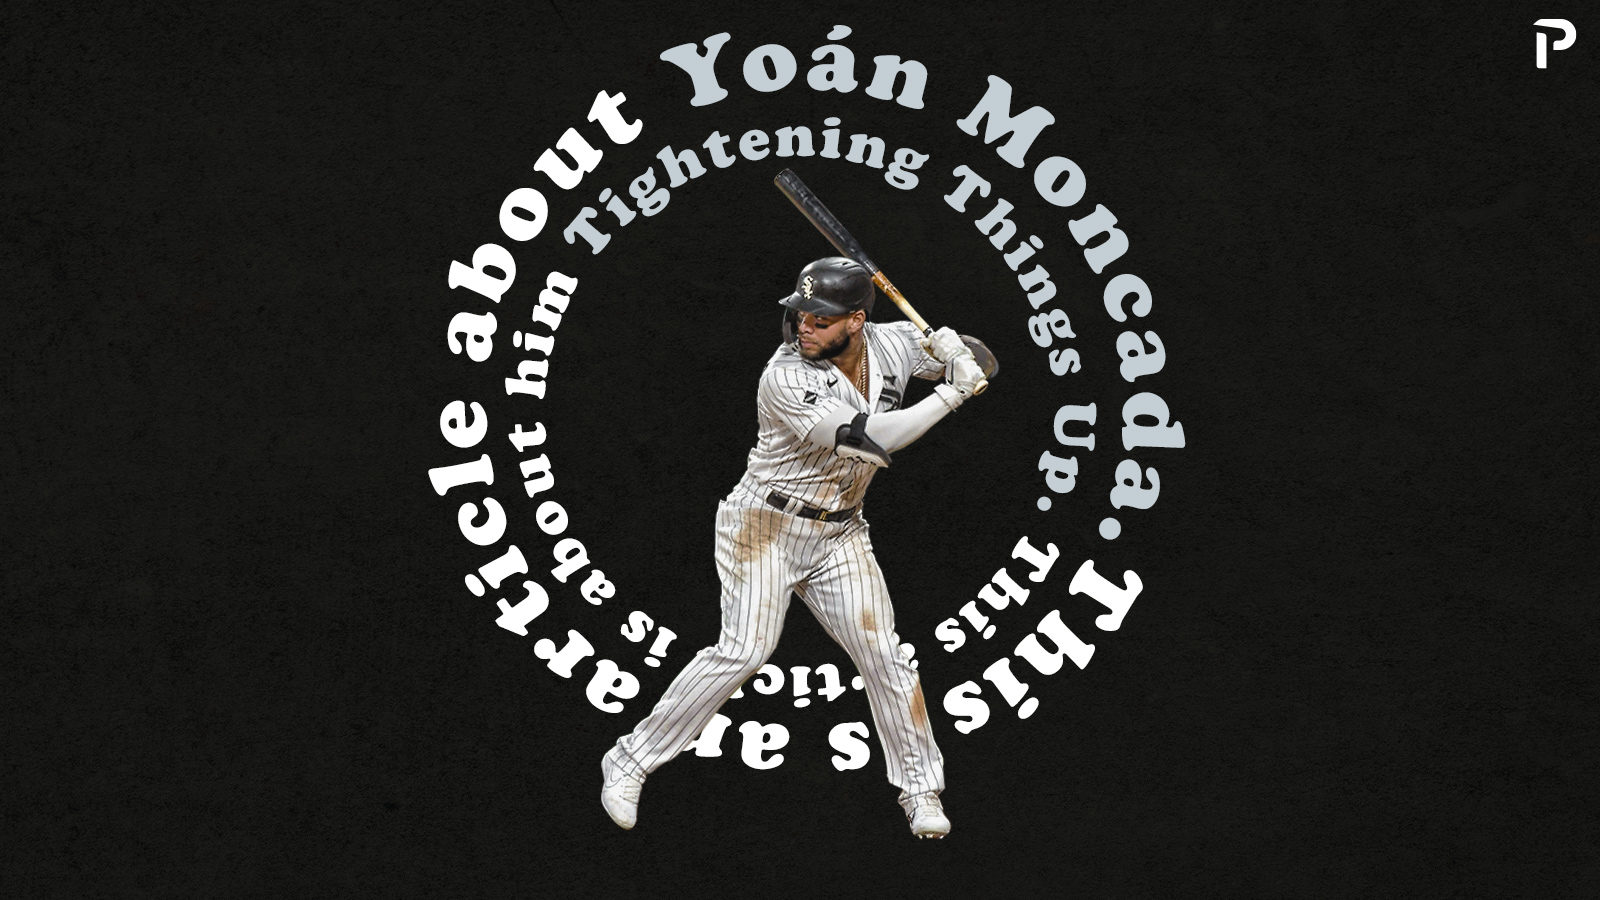 White Sox: Yoan Moncada's Rough 2018 No Reason to Panic